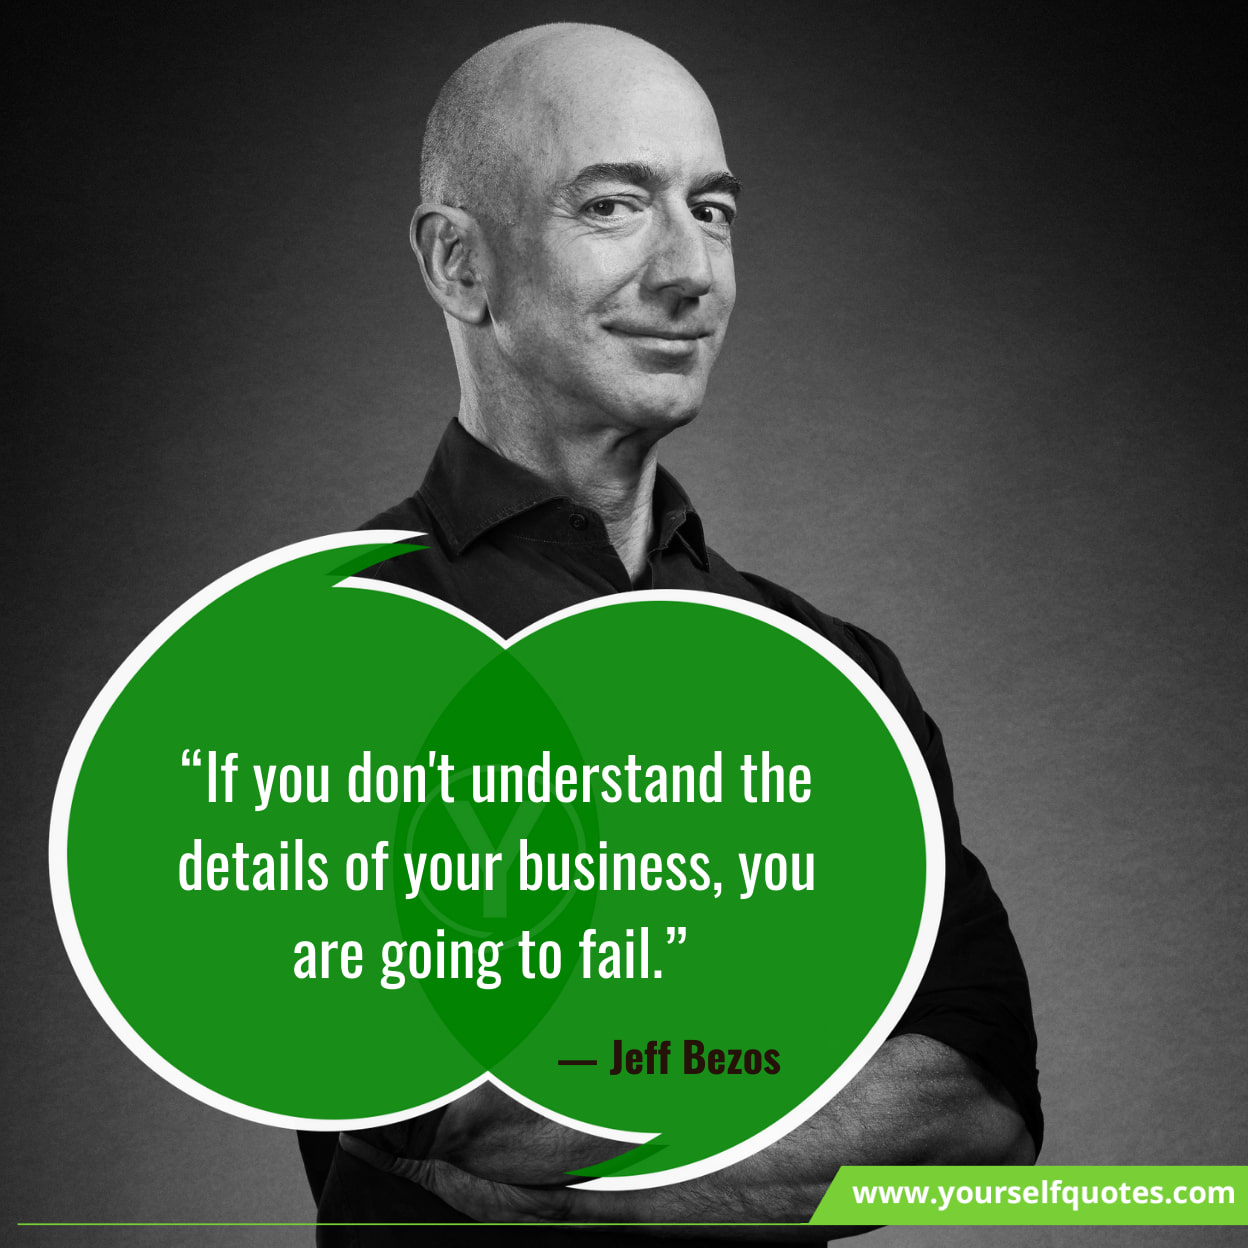 Jeff Bezos Quotes On Business